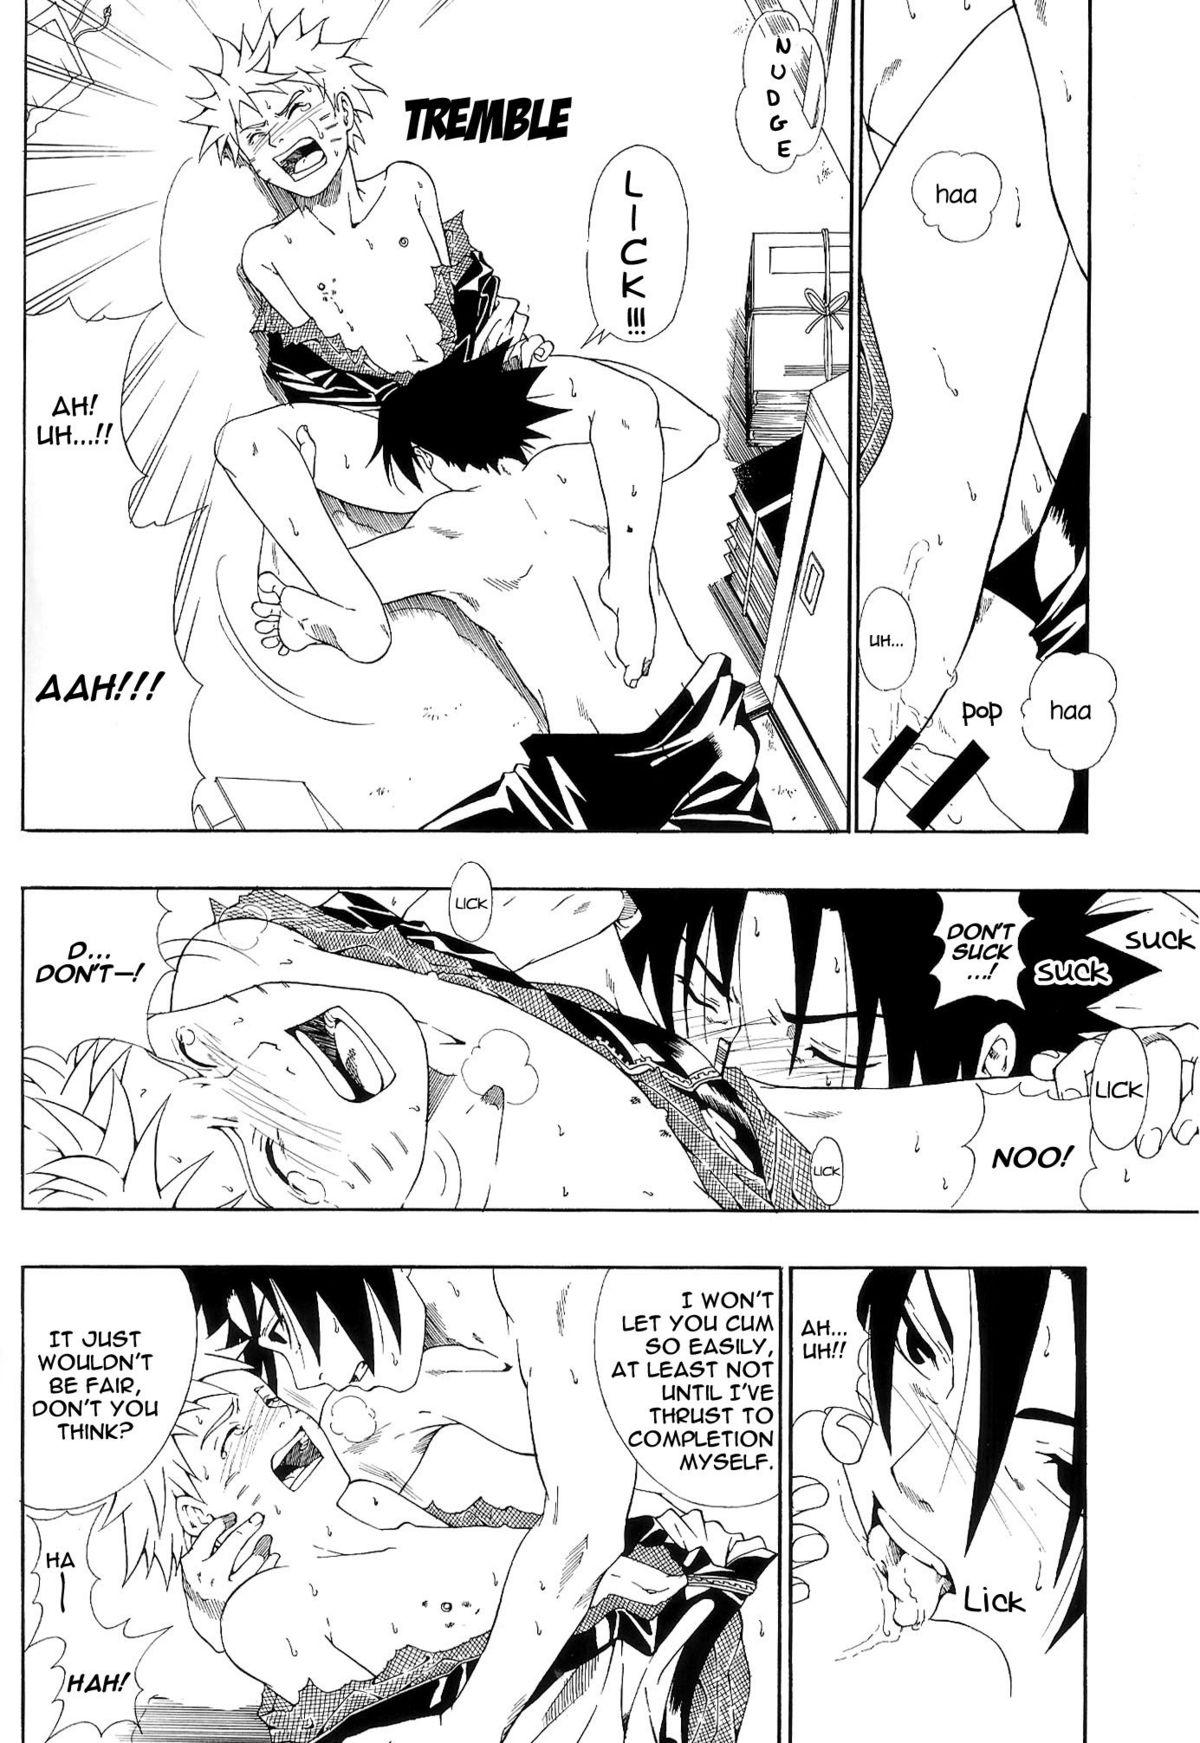 Freak ERO ERO²: Volume 1.5 (NARUTO) [Sasuke X Naruto] YAOI -ENG- - Naruto Tease - Page 9